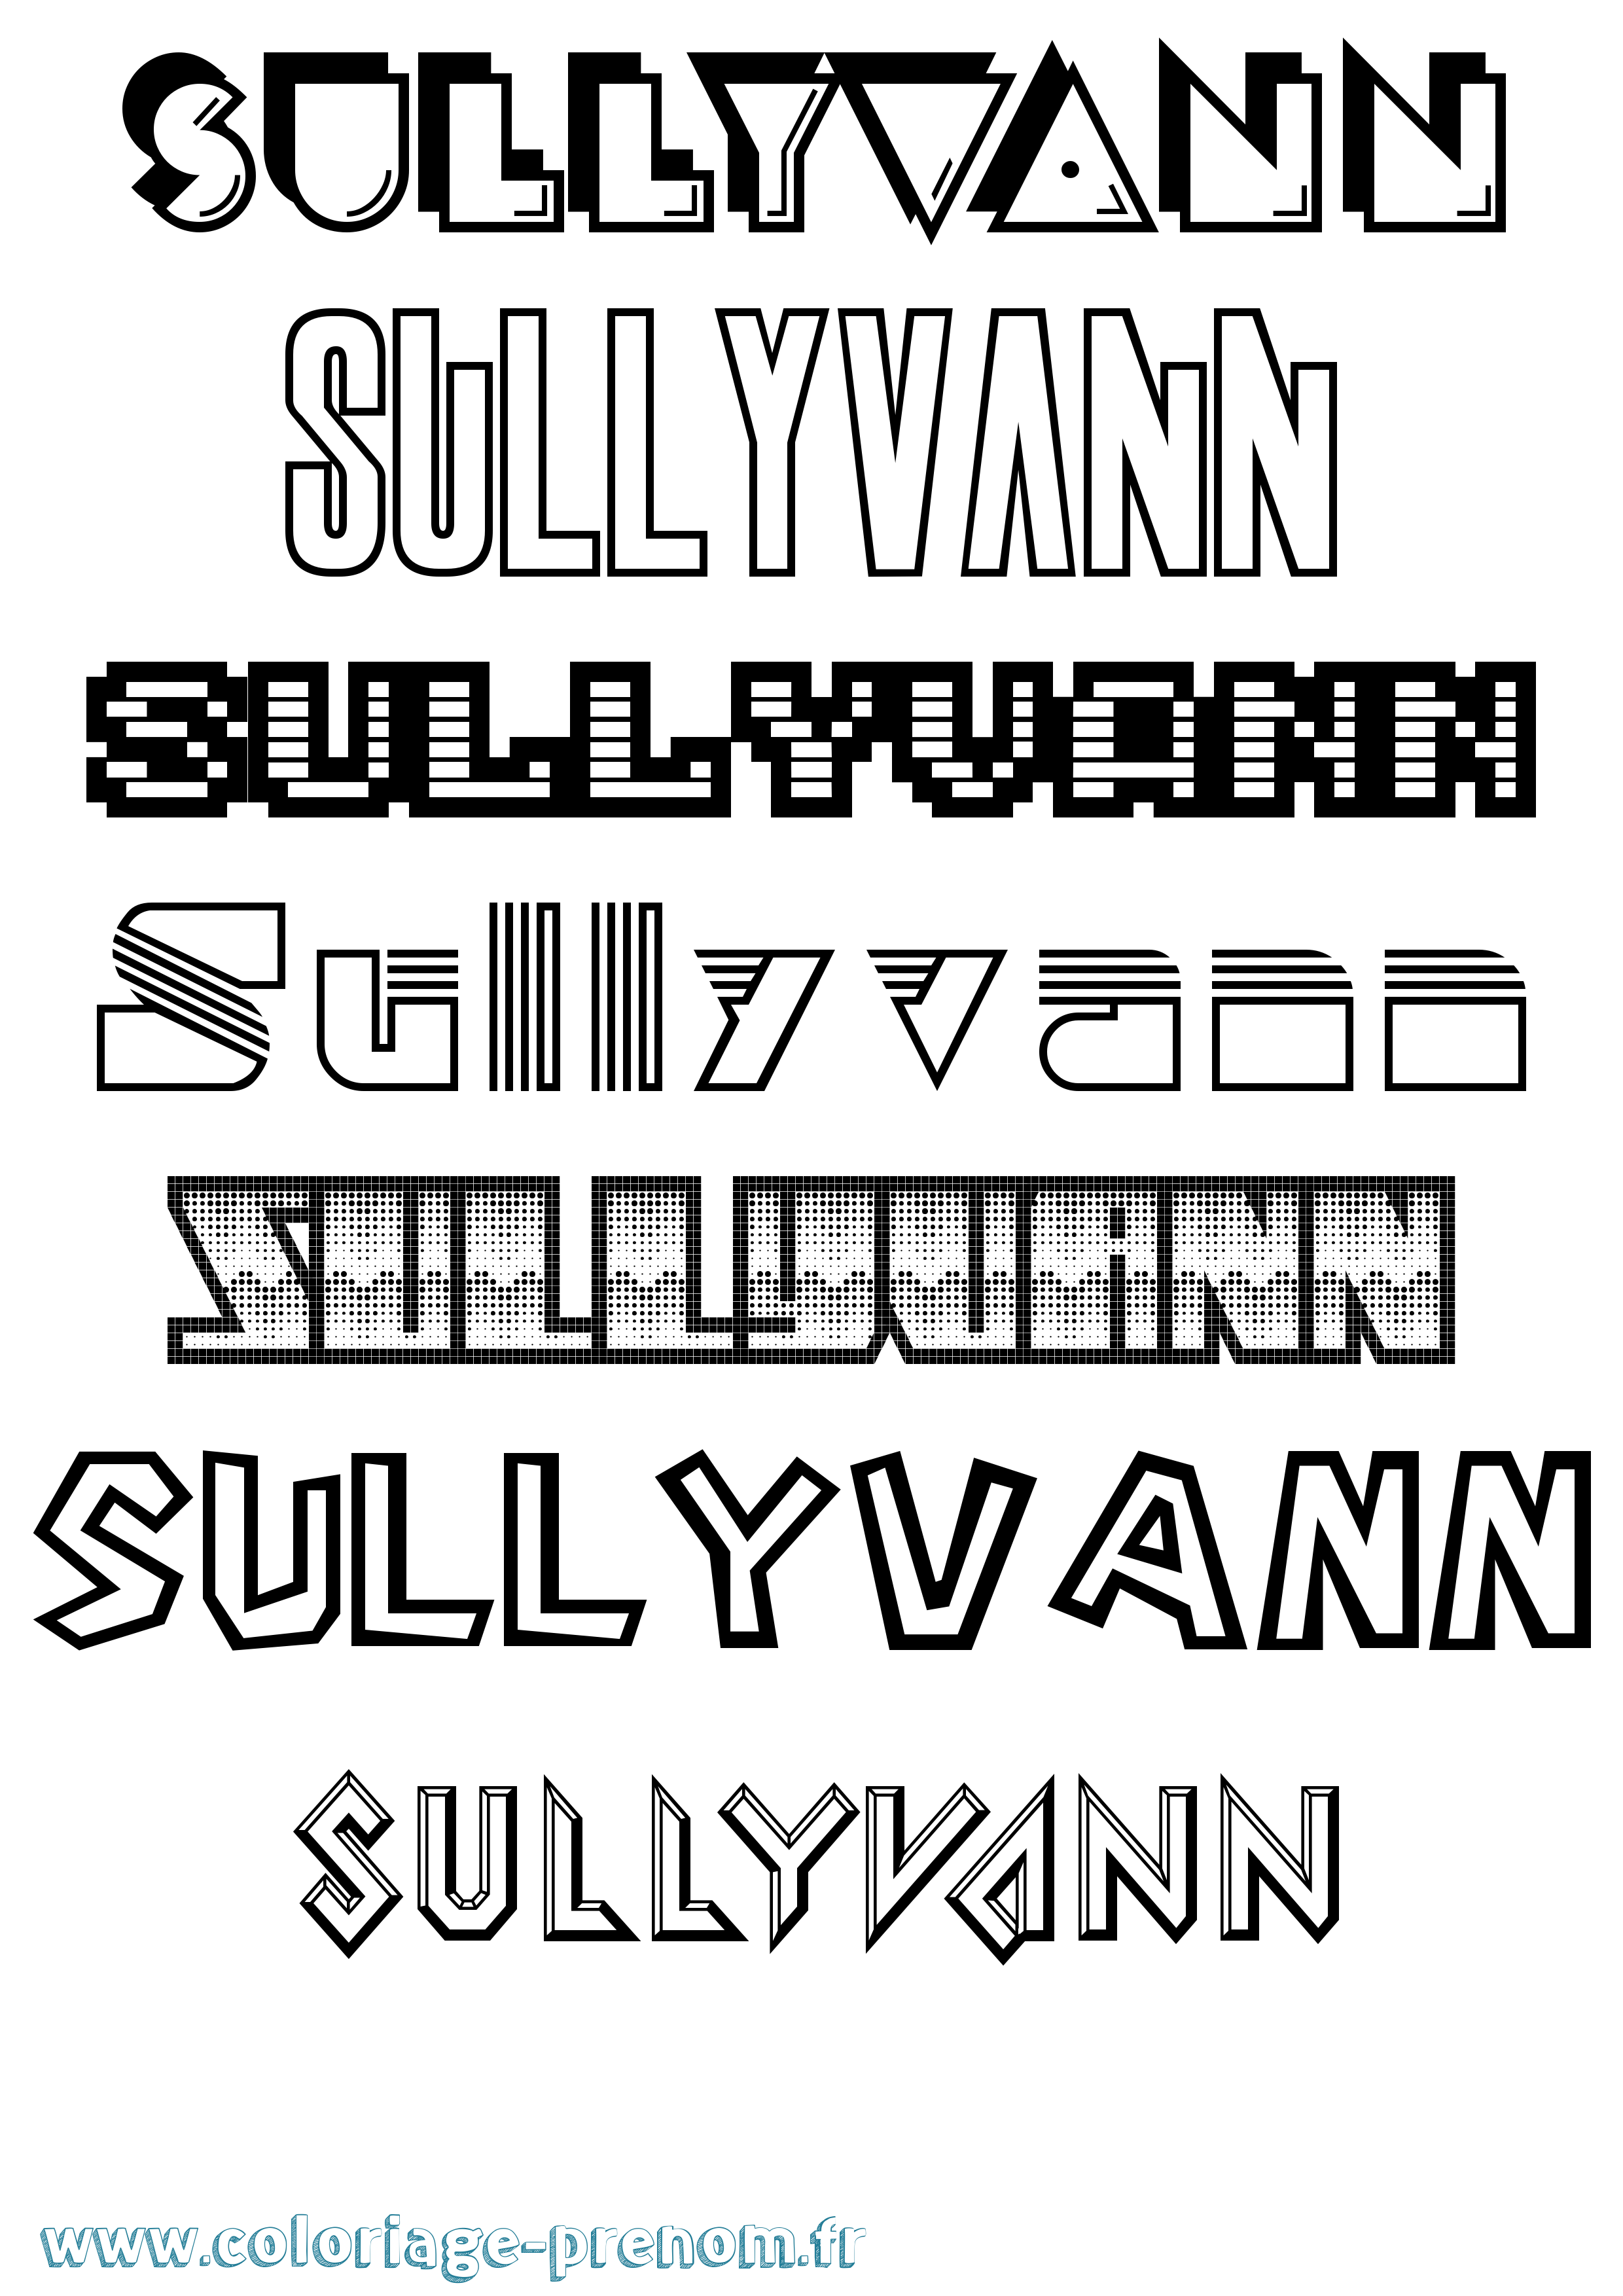 Coloriage prénom Sullyvann Jeux Vidéos